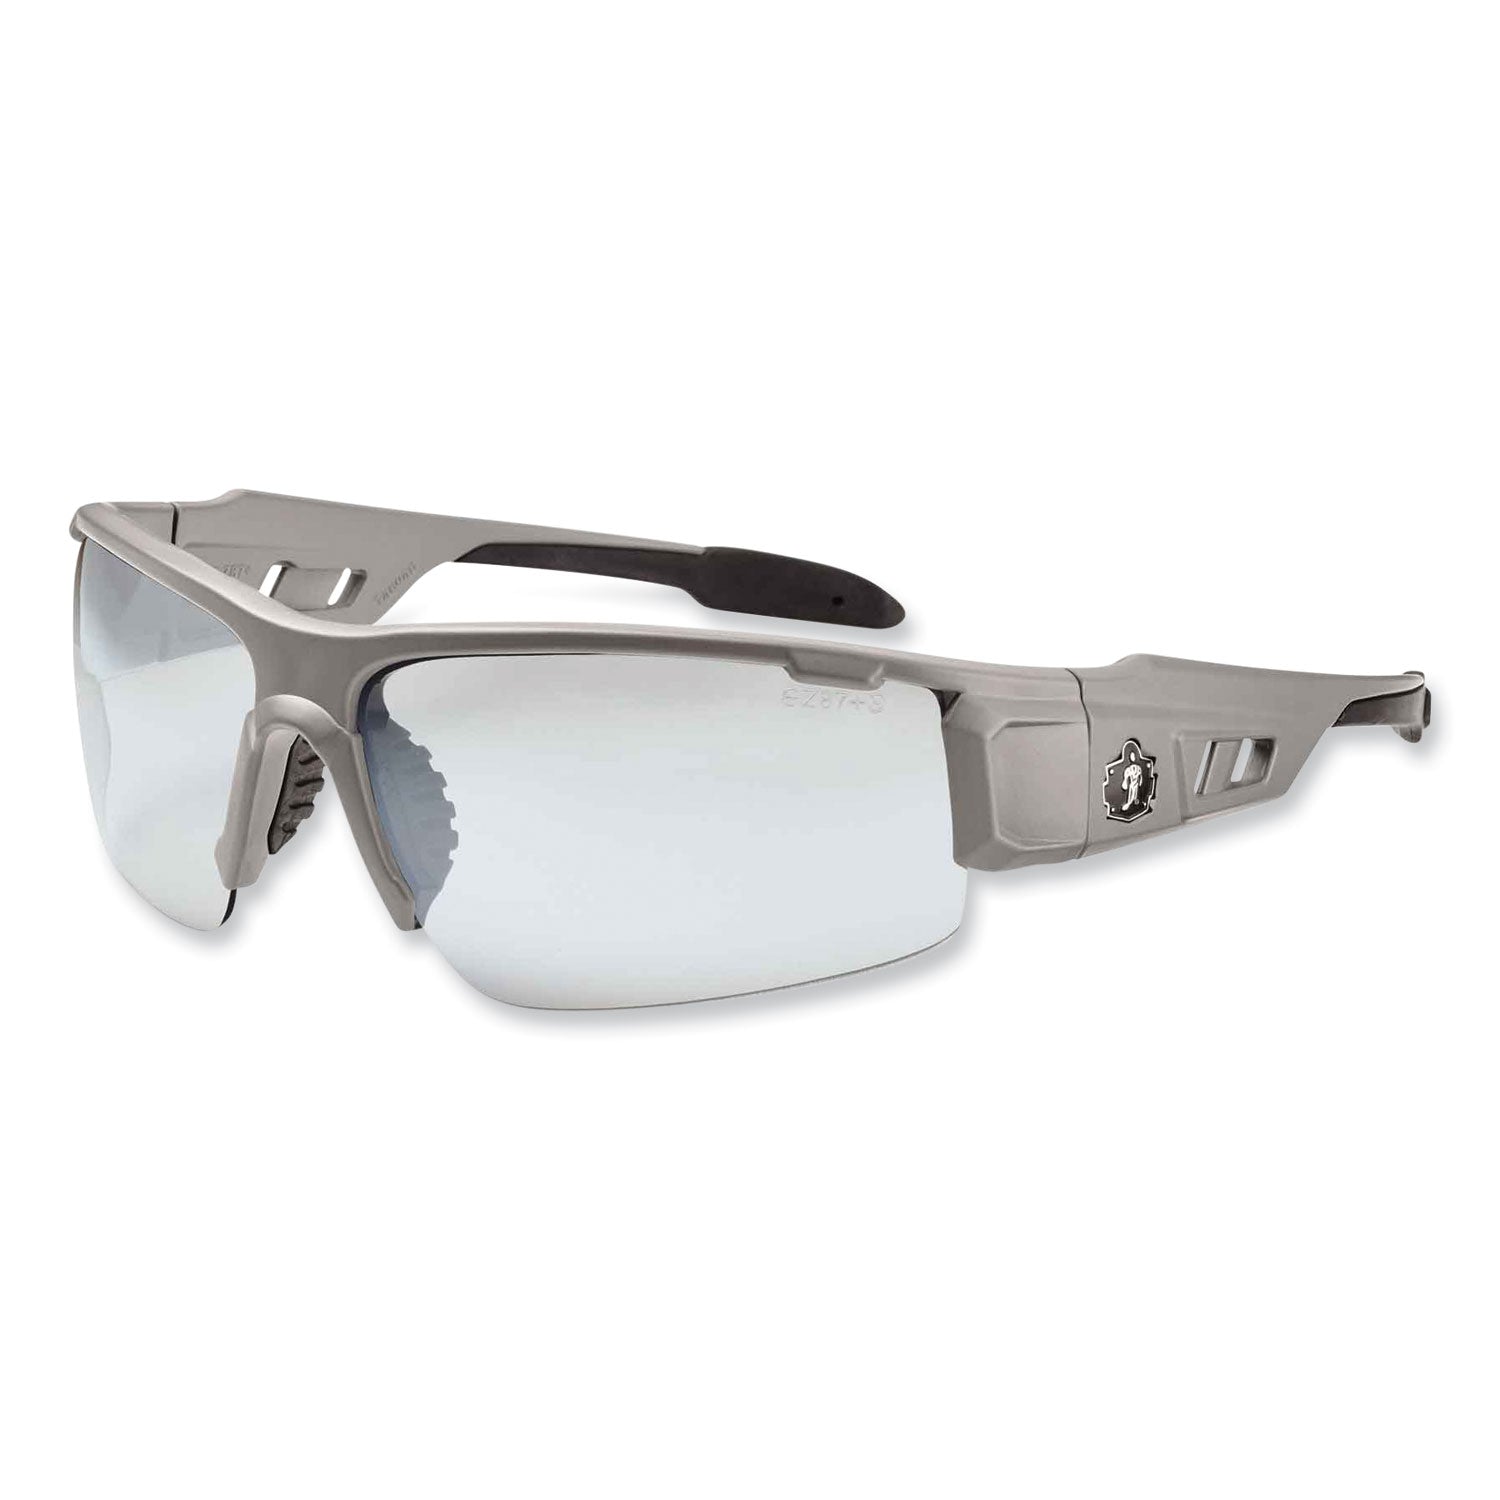 skullerz-dagr-safety-glasses-matte-gray-nylon-impact-frame-indoor-outdoor-polycarbonate-lens-ships-in-1-3-business-days_ego52180 - 1